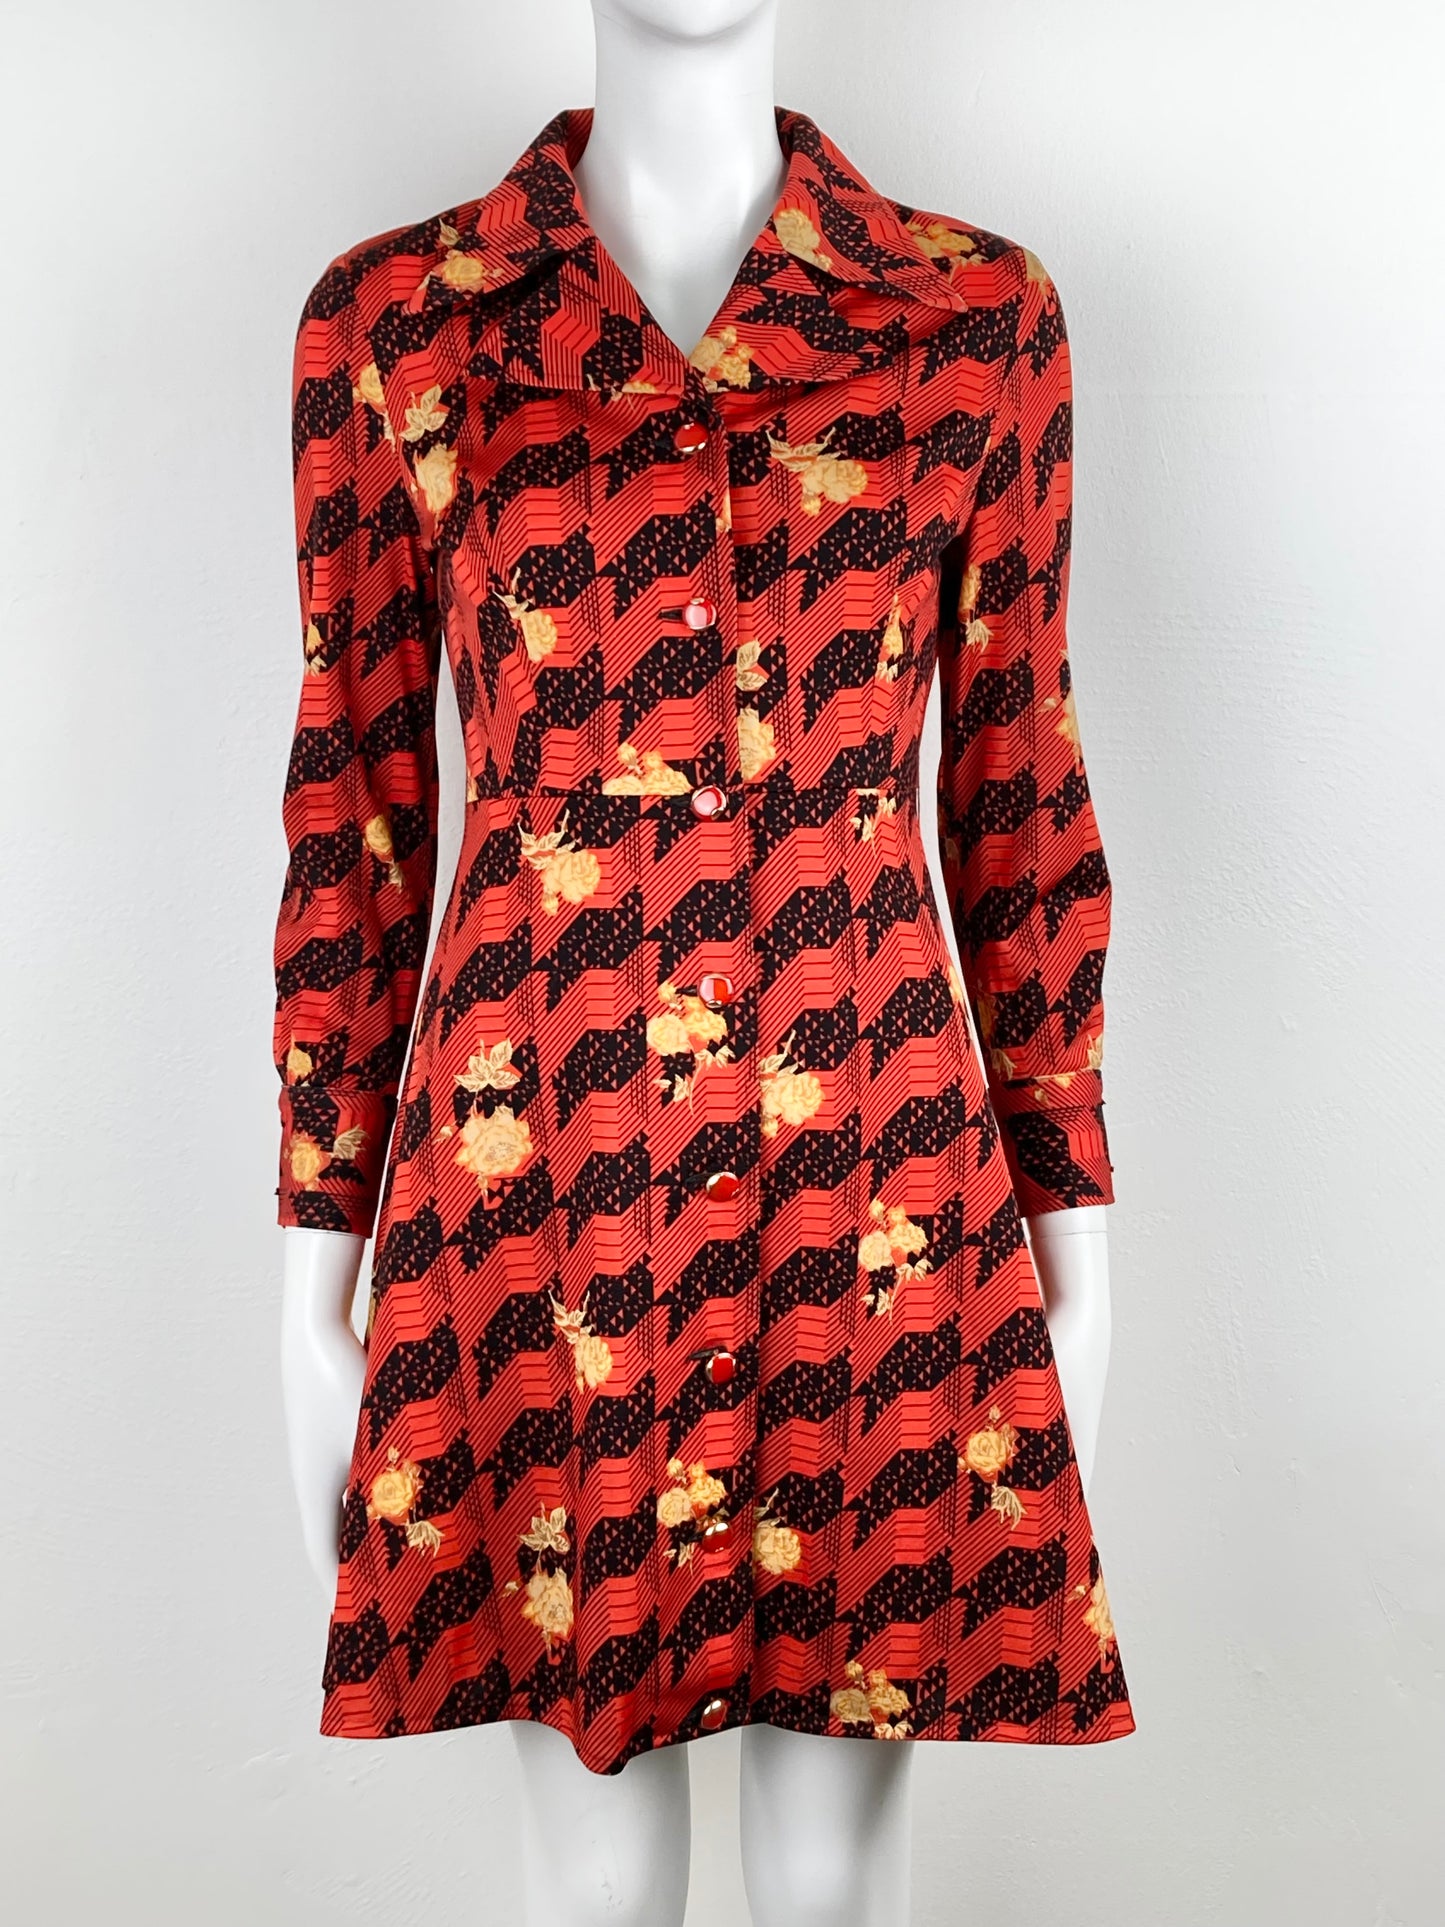 Mod 70s Burnt Orange And Black Knit Mini Dress, Mod shirtwaist 70s Dress, Size S